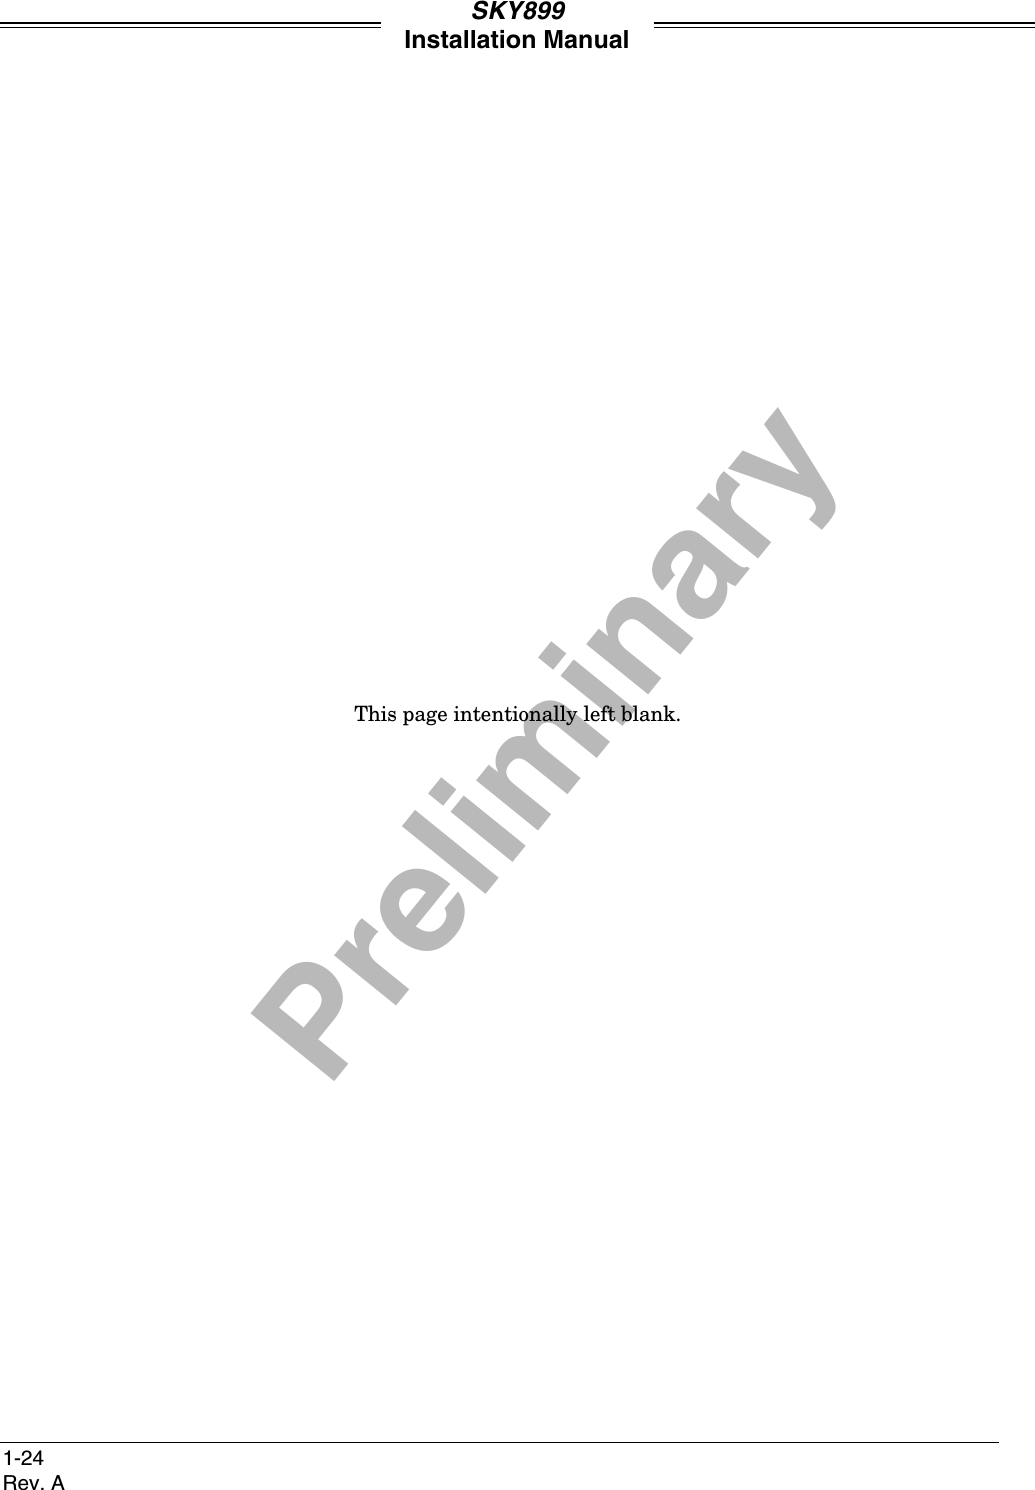 PreliminarySKY899Installation Manual1-24Rev. AThis page intentionally left blank.